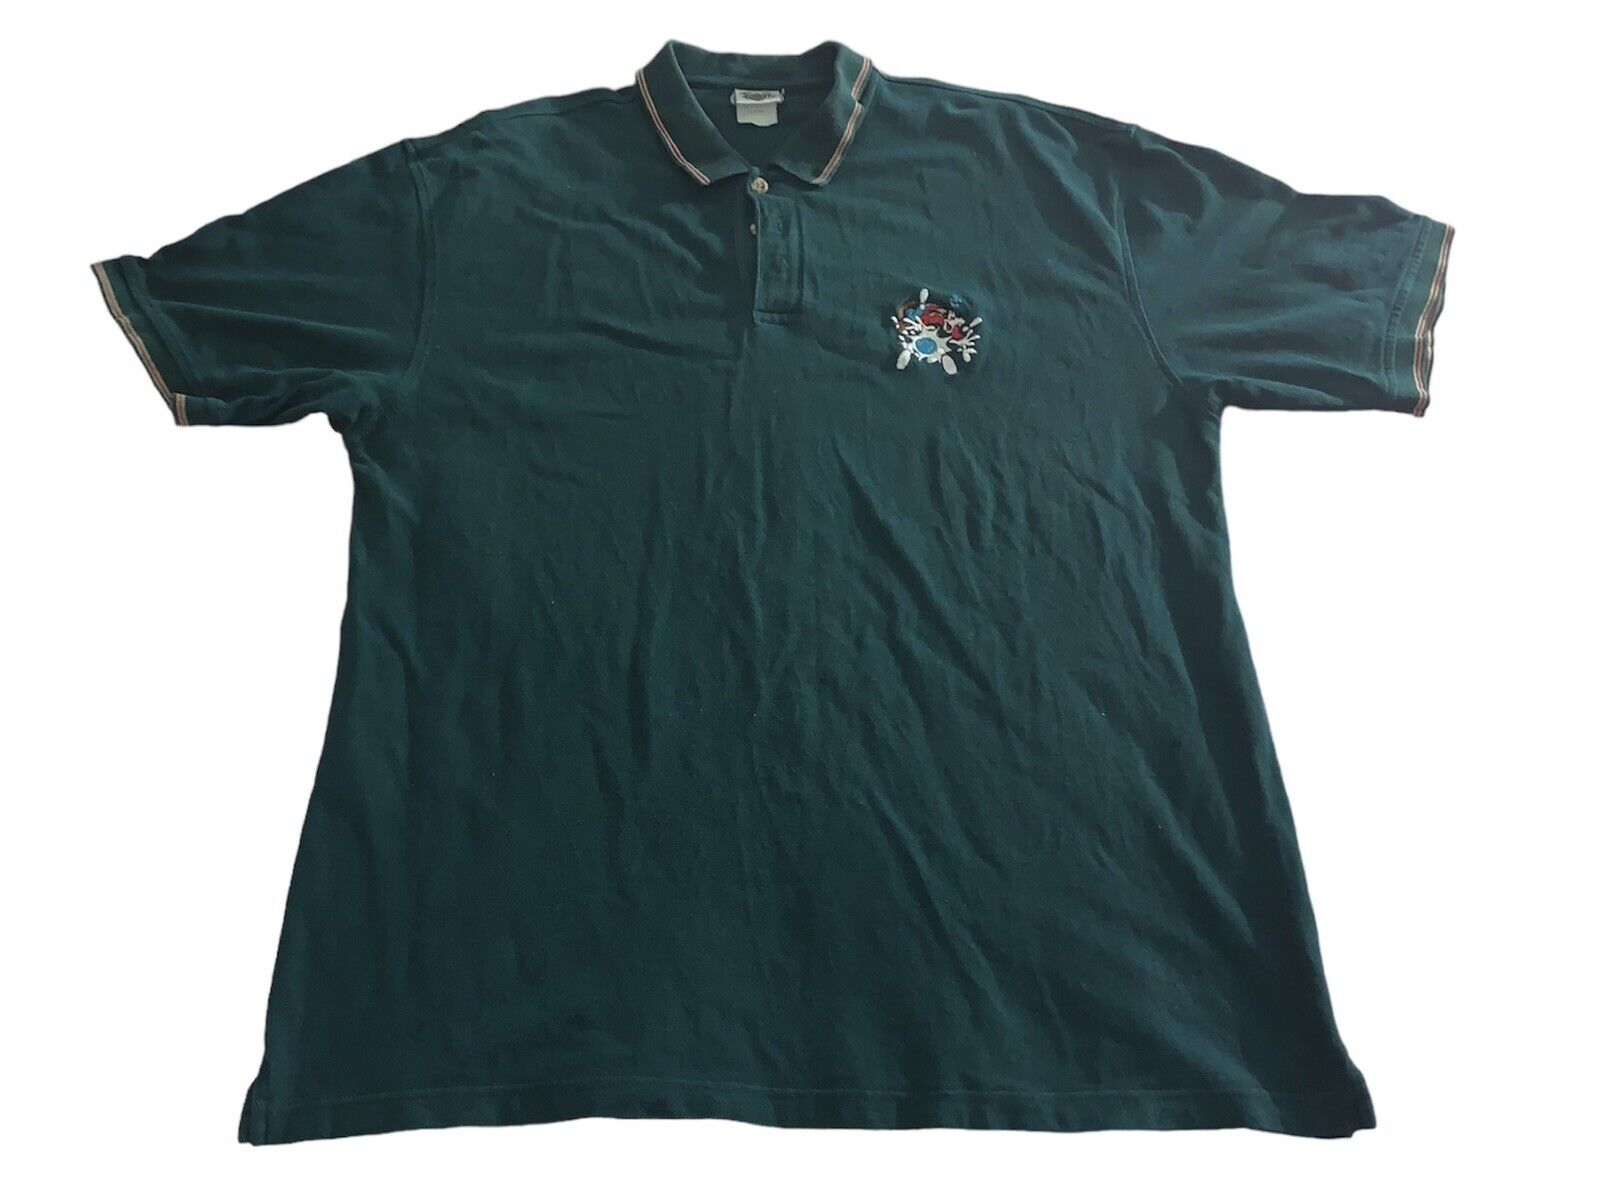 Vintage 90s Disney Catalog Goofy Bowling Green Polo Shirt Size XL VTG 25x33